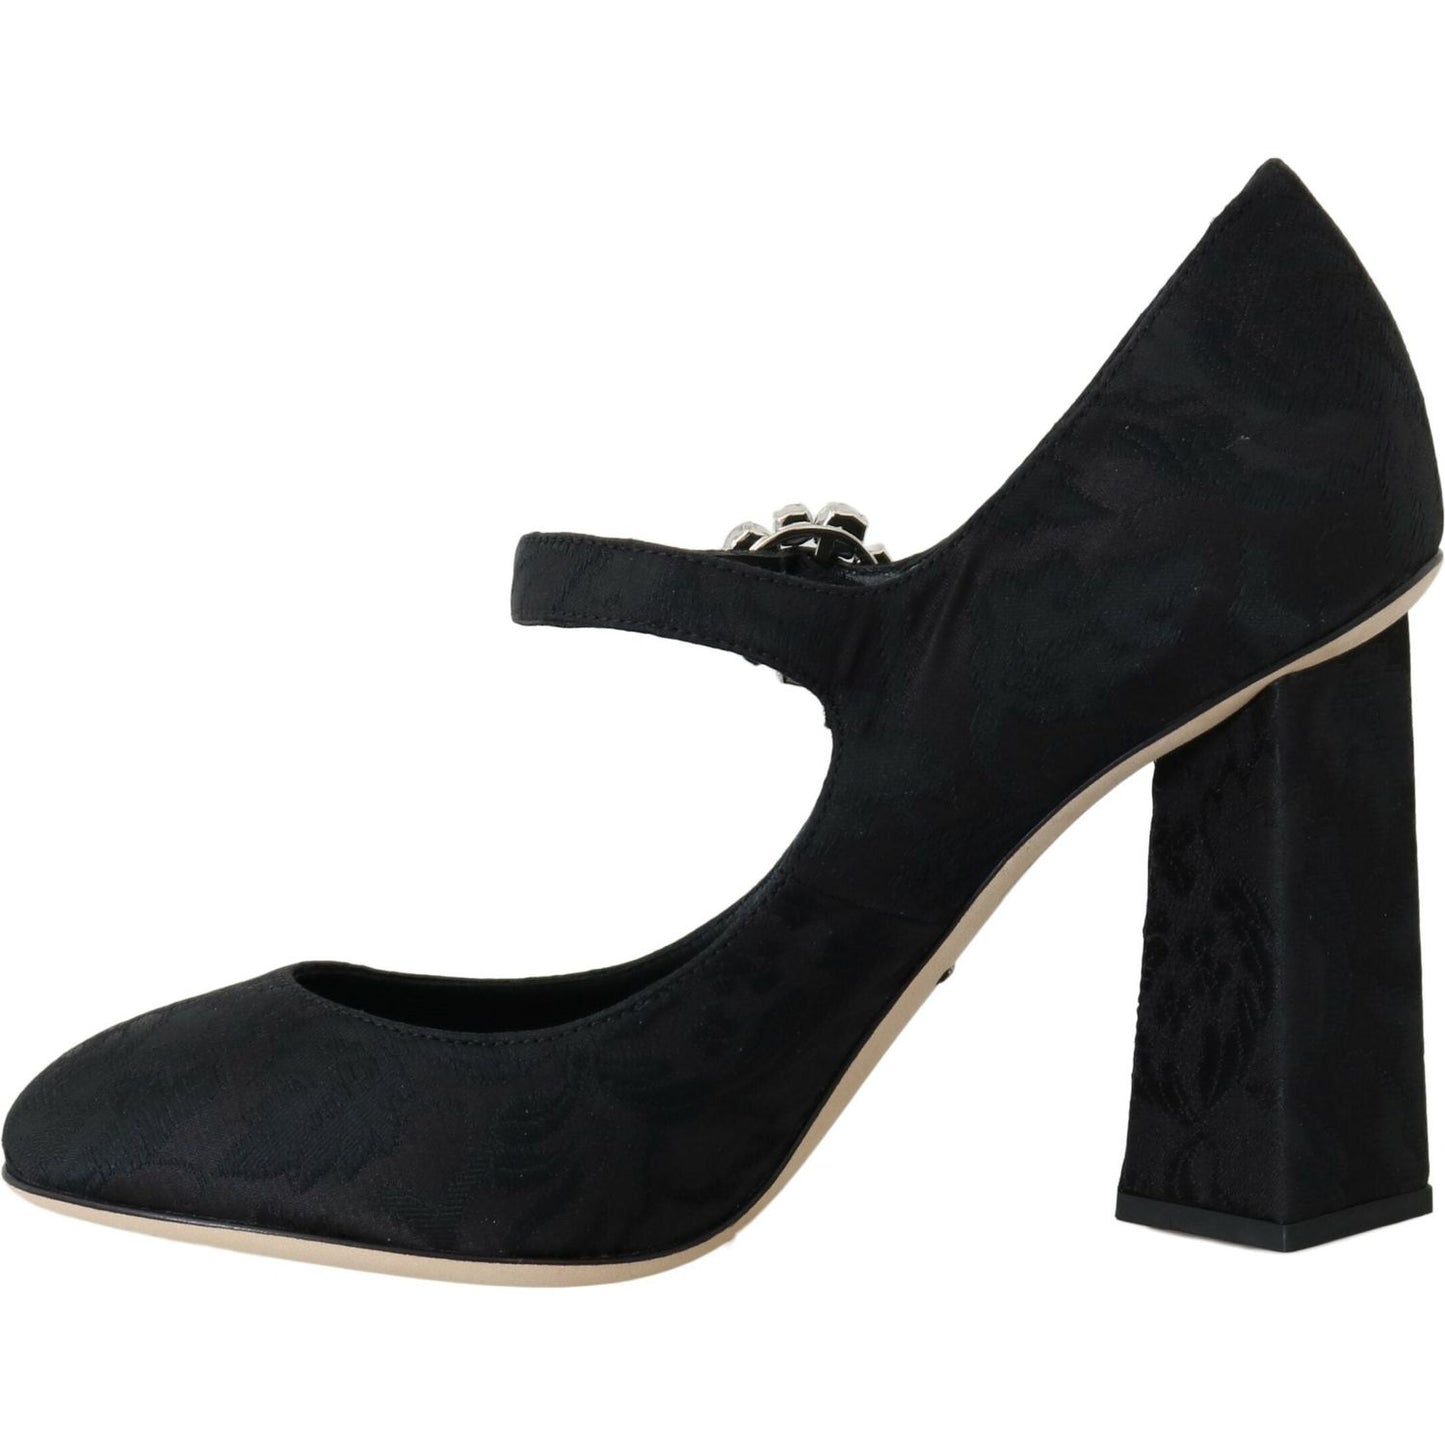 Dolce & Gabbana Elegant Black Crystal Brocade Pumps black-brocade-high-heels-mary-janes-shoes